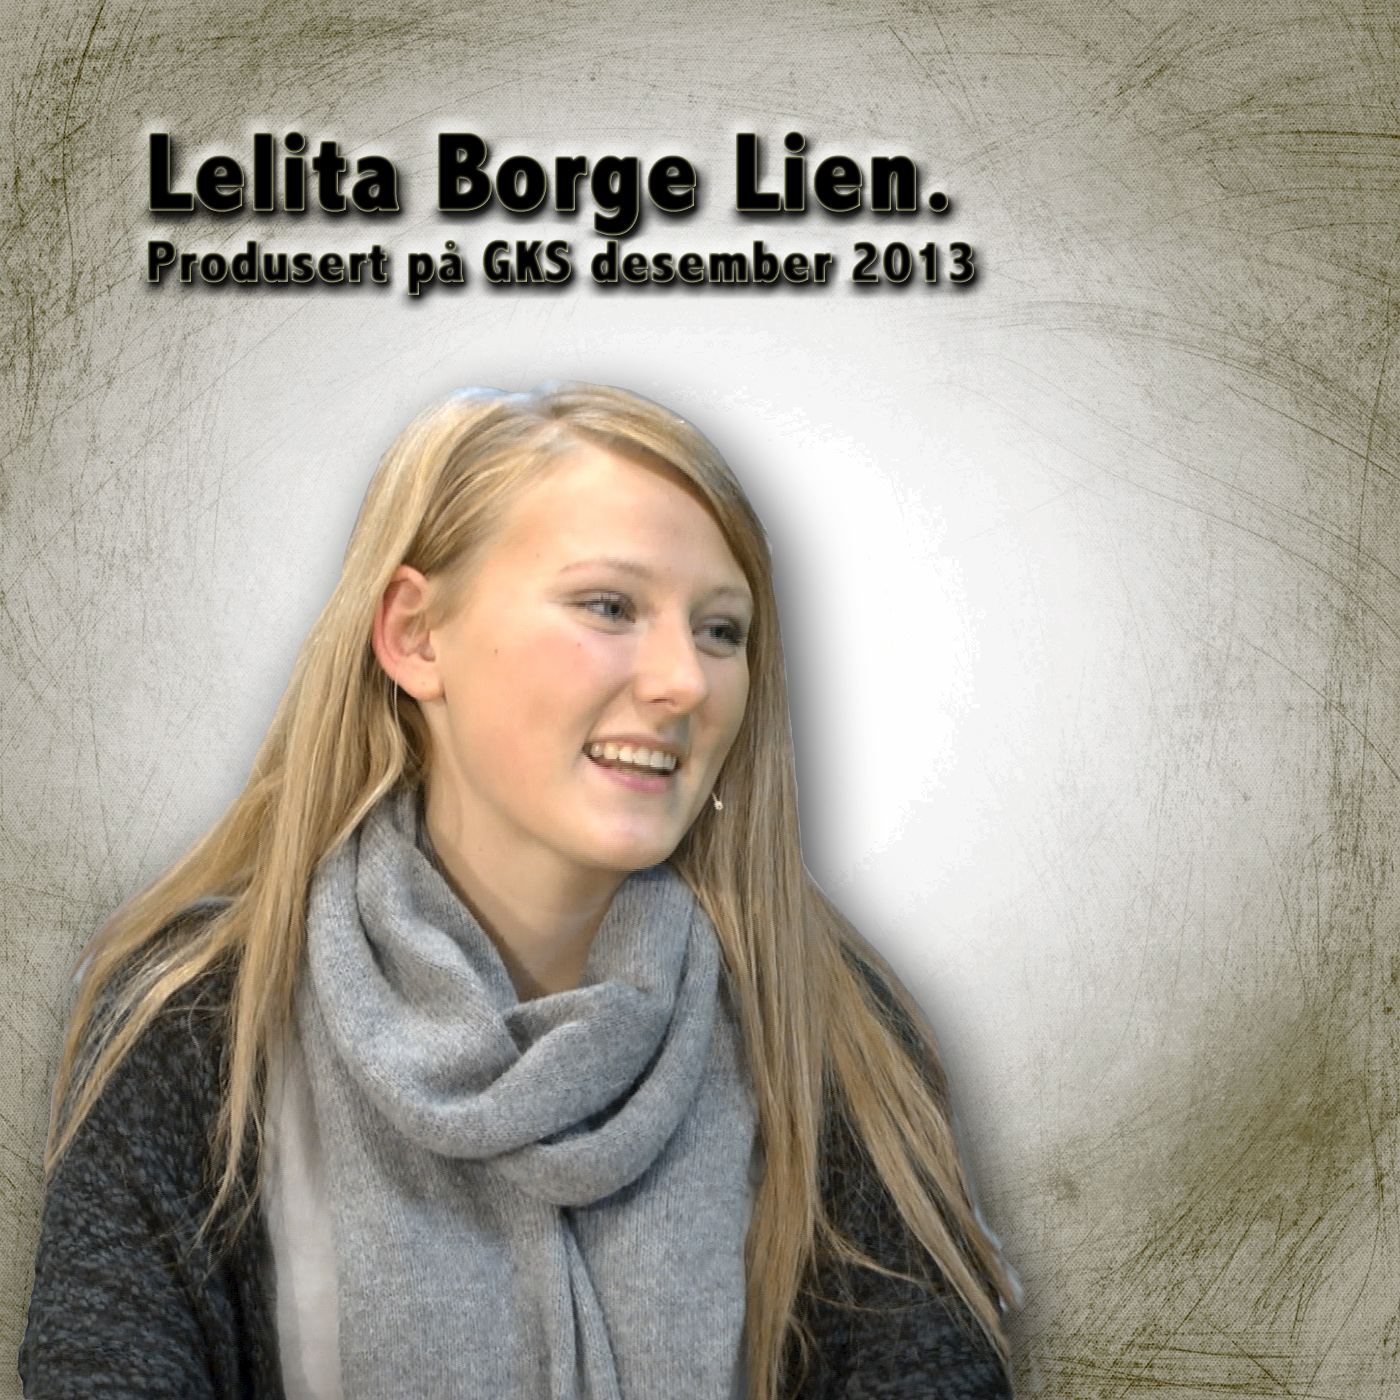 Lelita Borge Lien